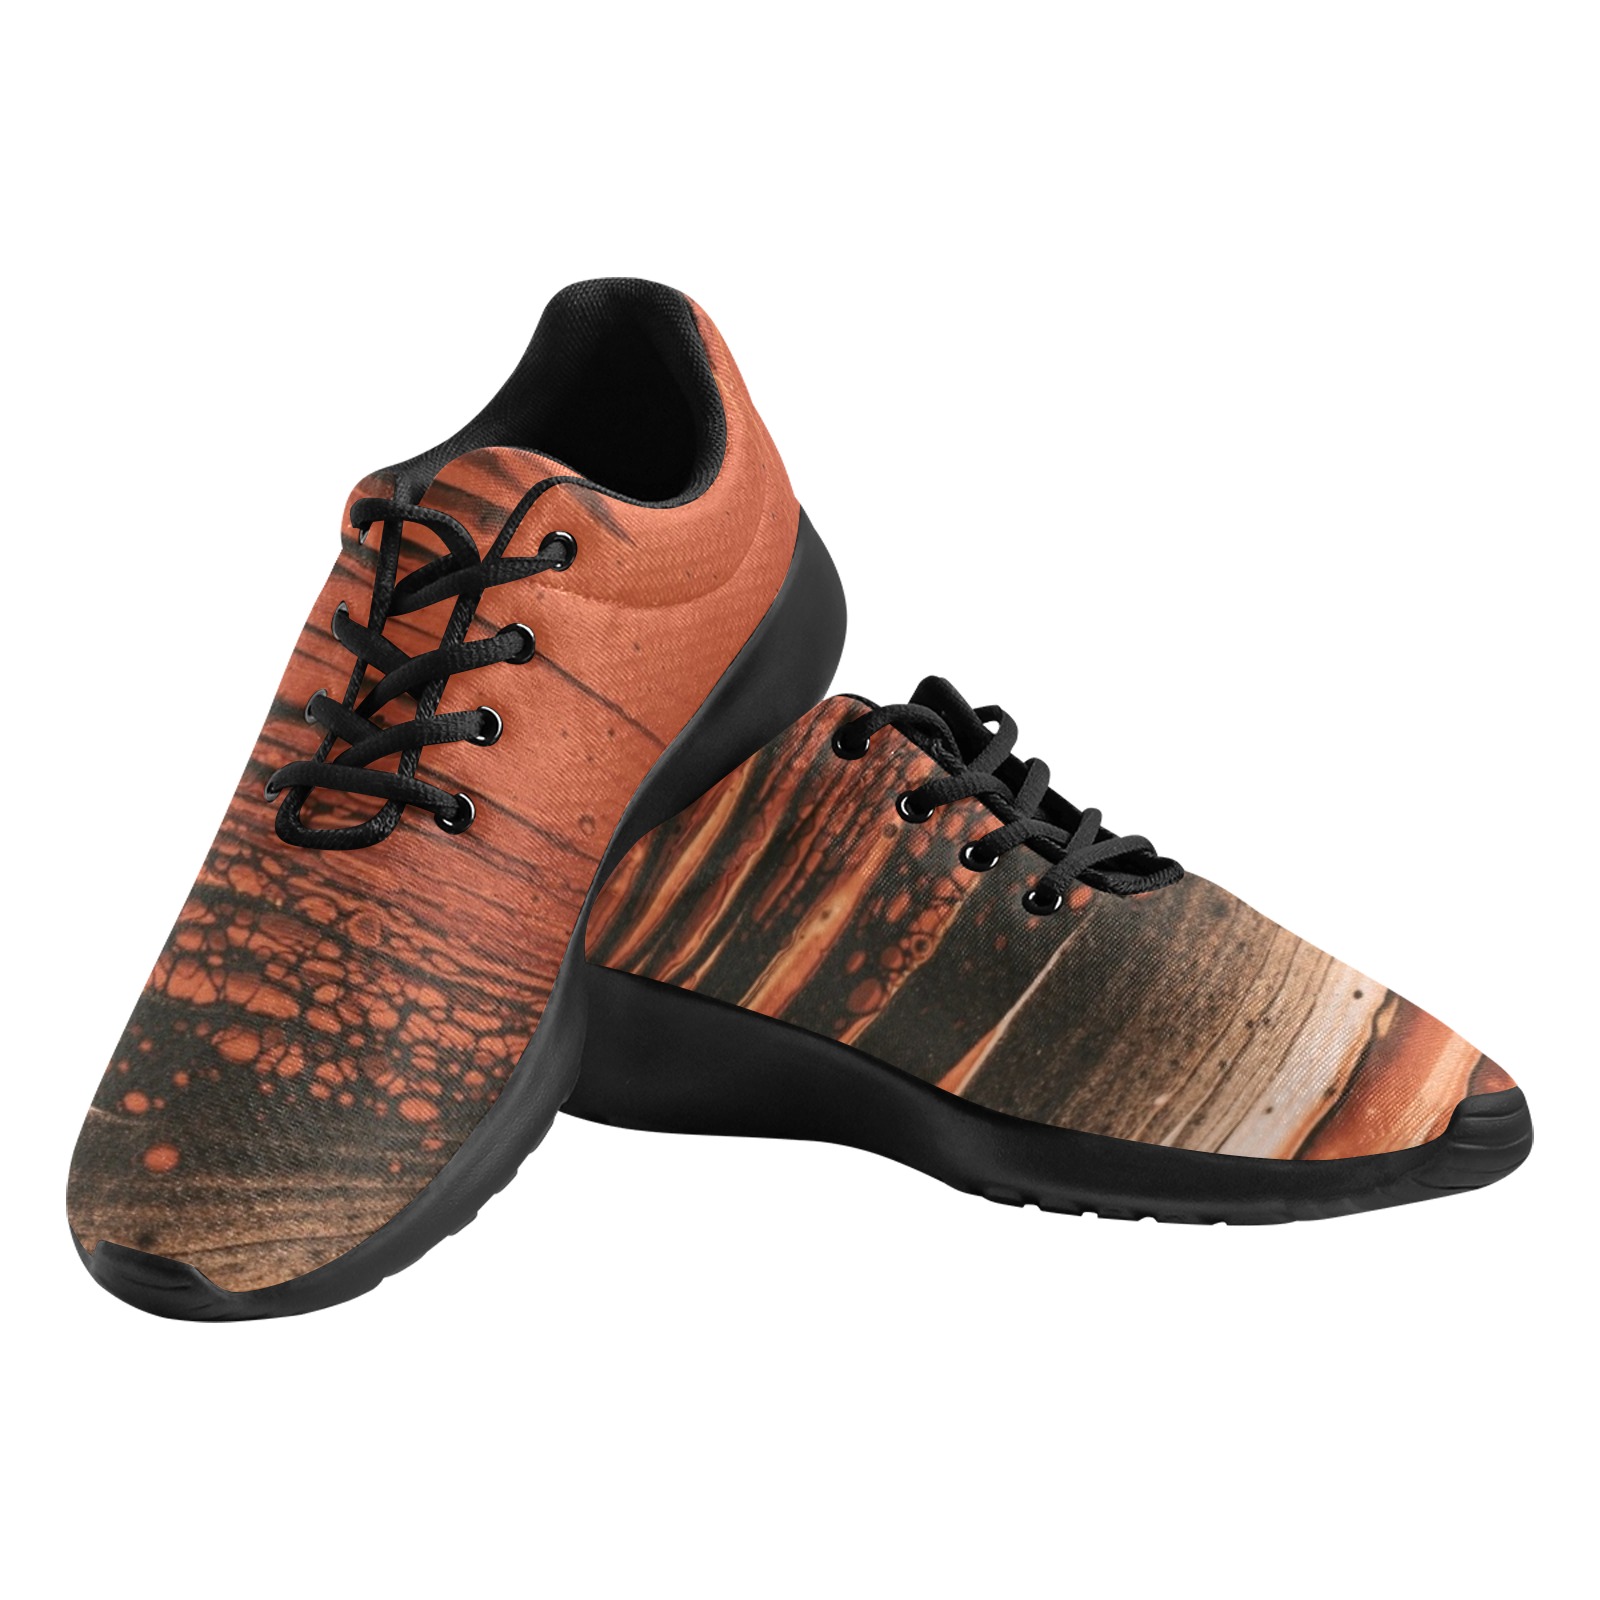 Sliders Men's Athletic Shoes (Model 0200)